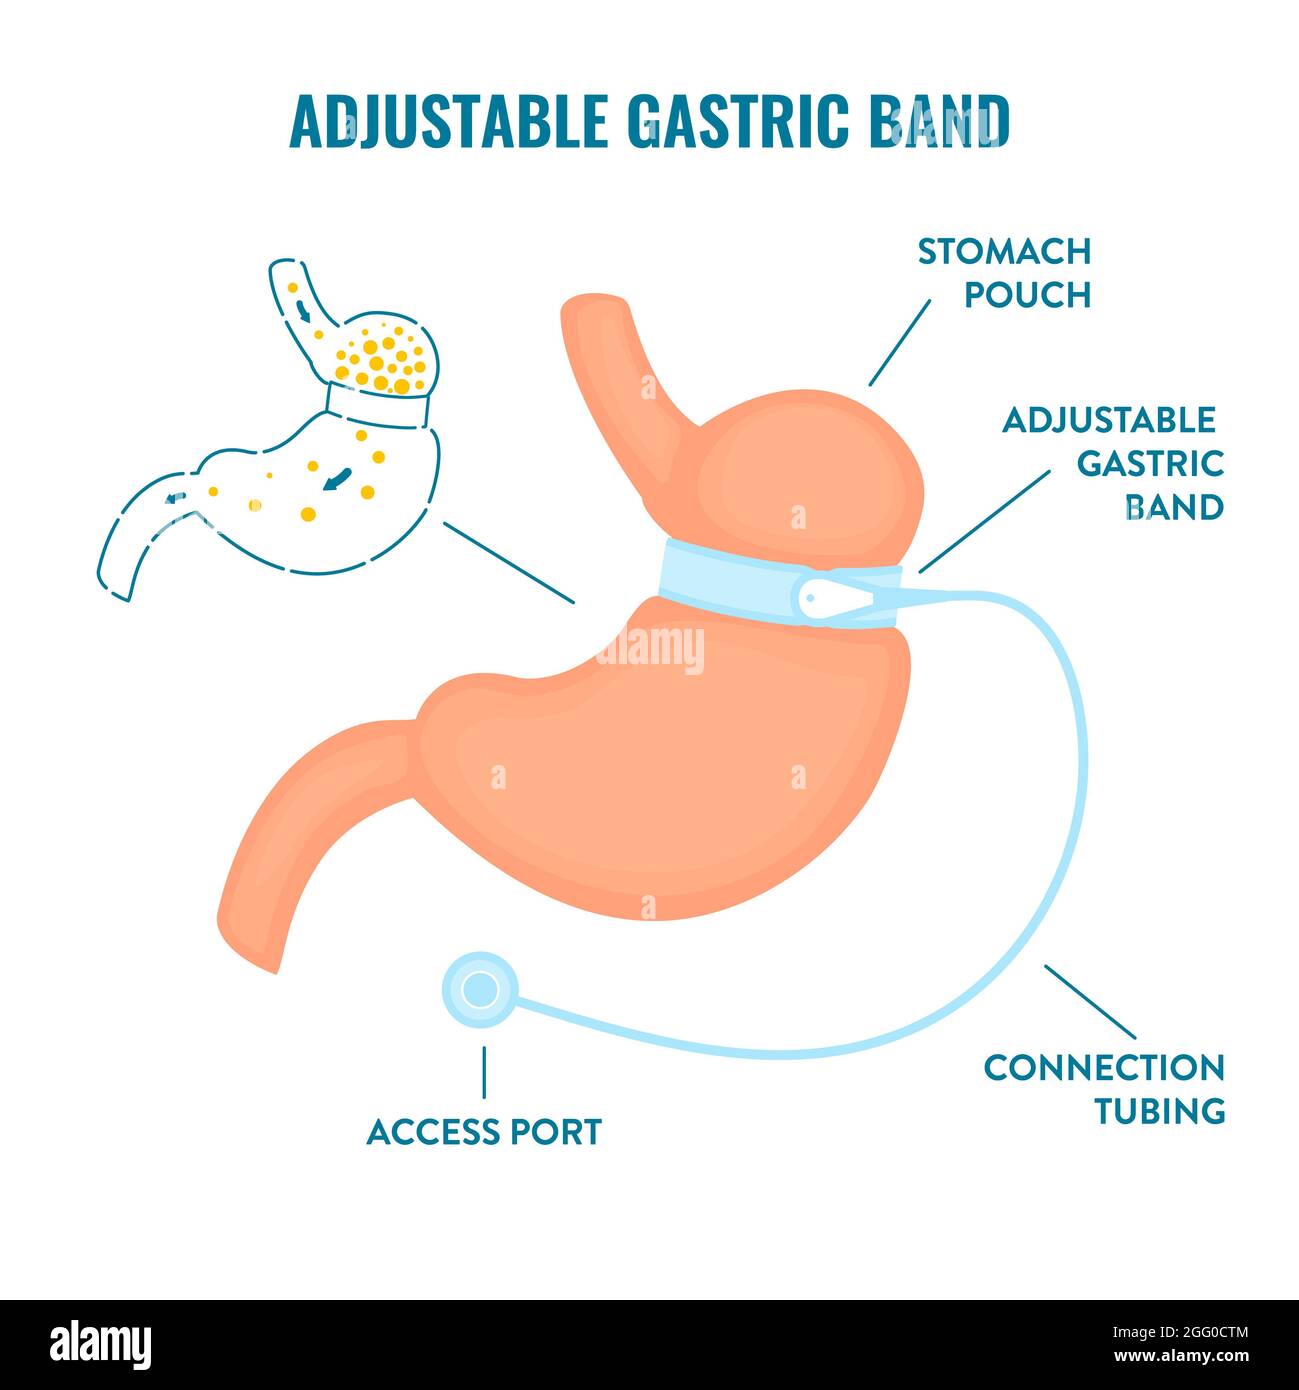 Adjustable gastric band bariatric surgery, illustration. Stock Photo